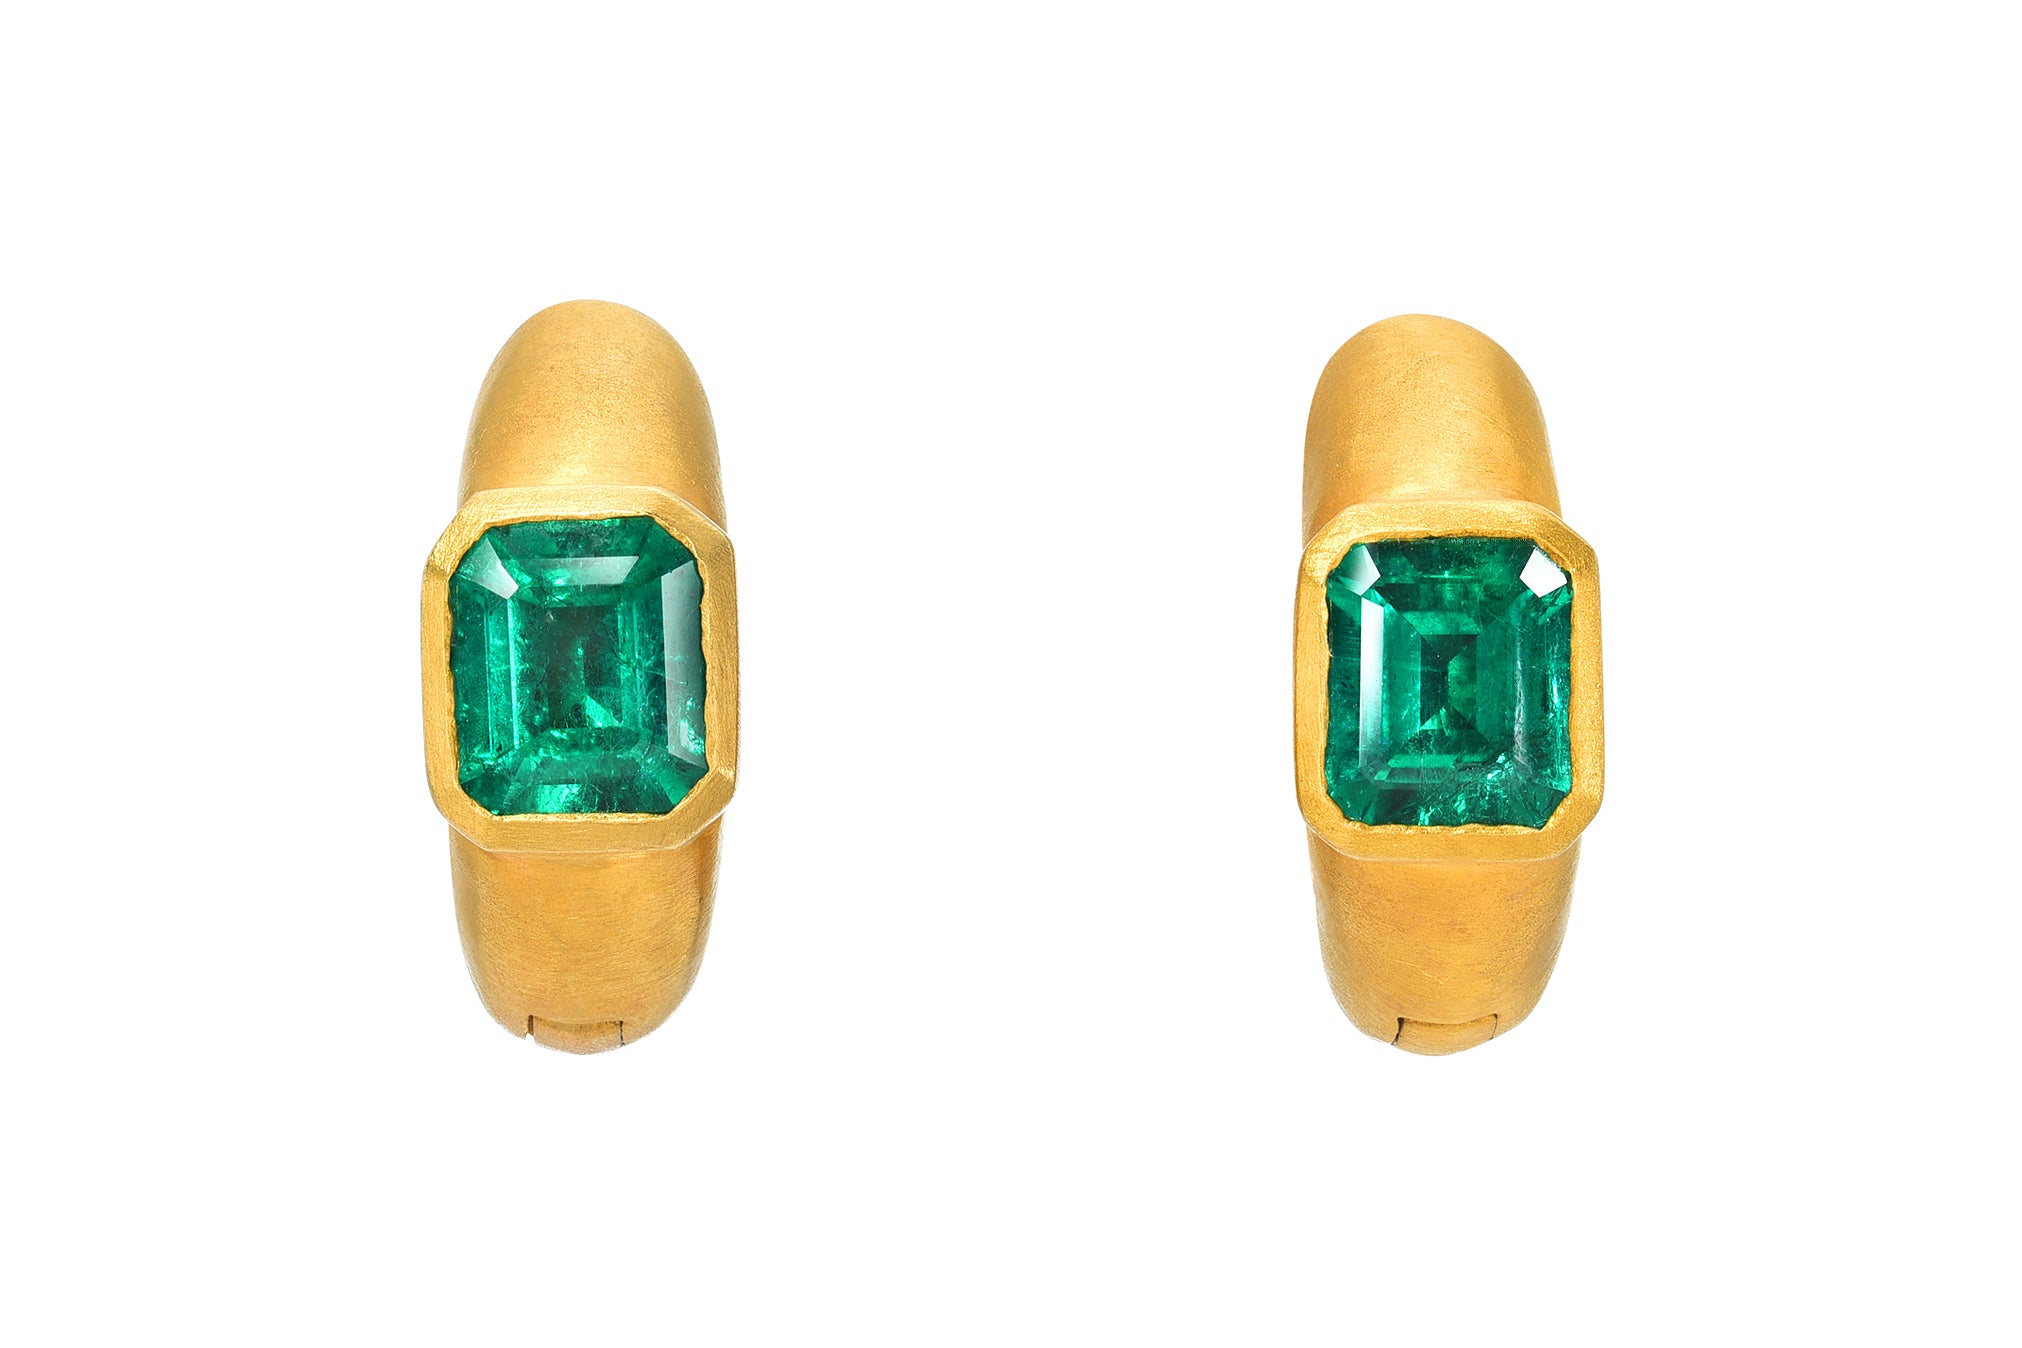 Darius Jewels one of a kind emerald signature hoops